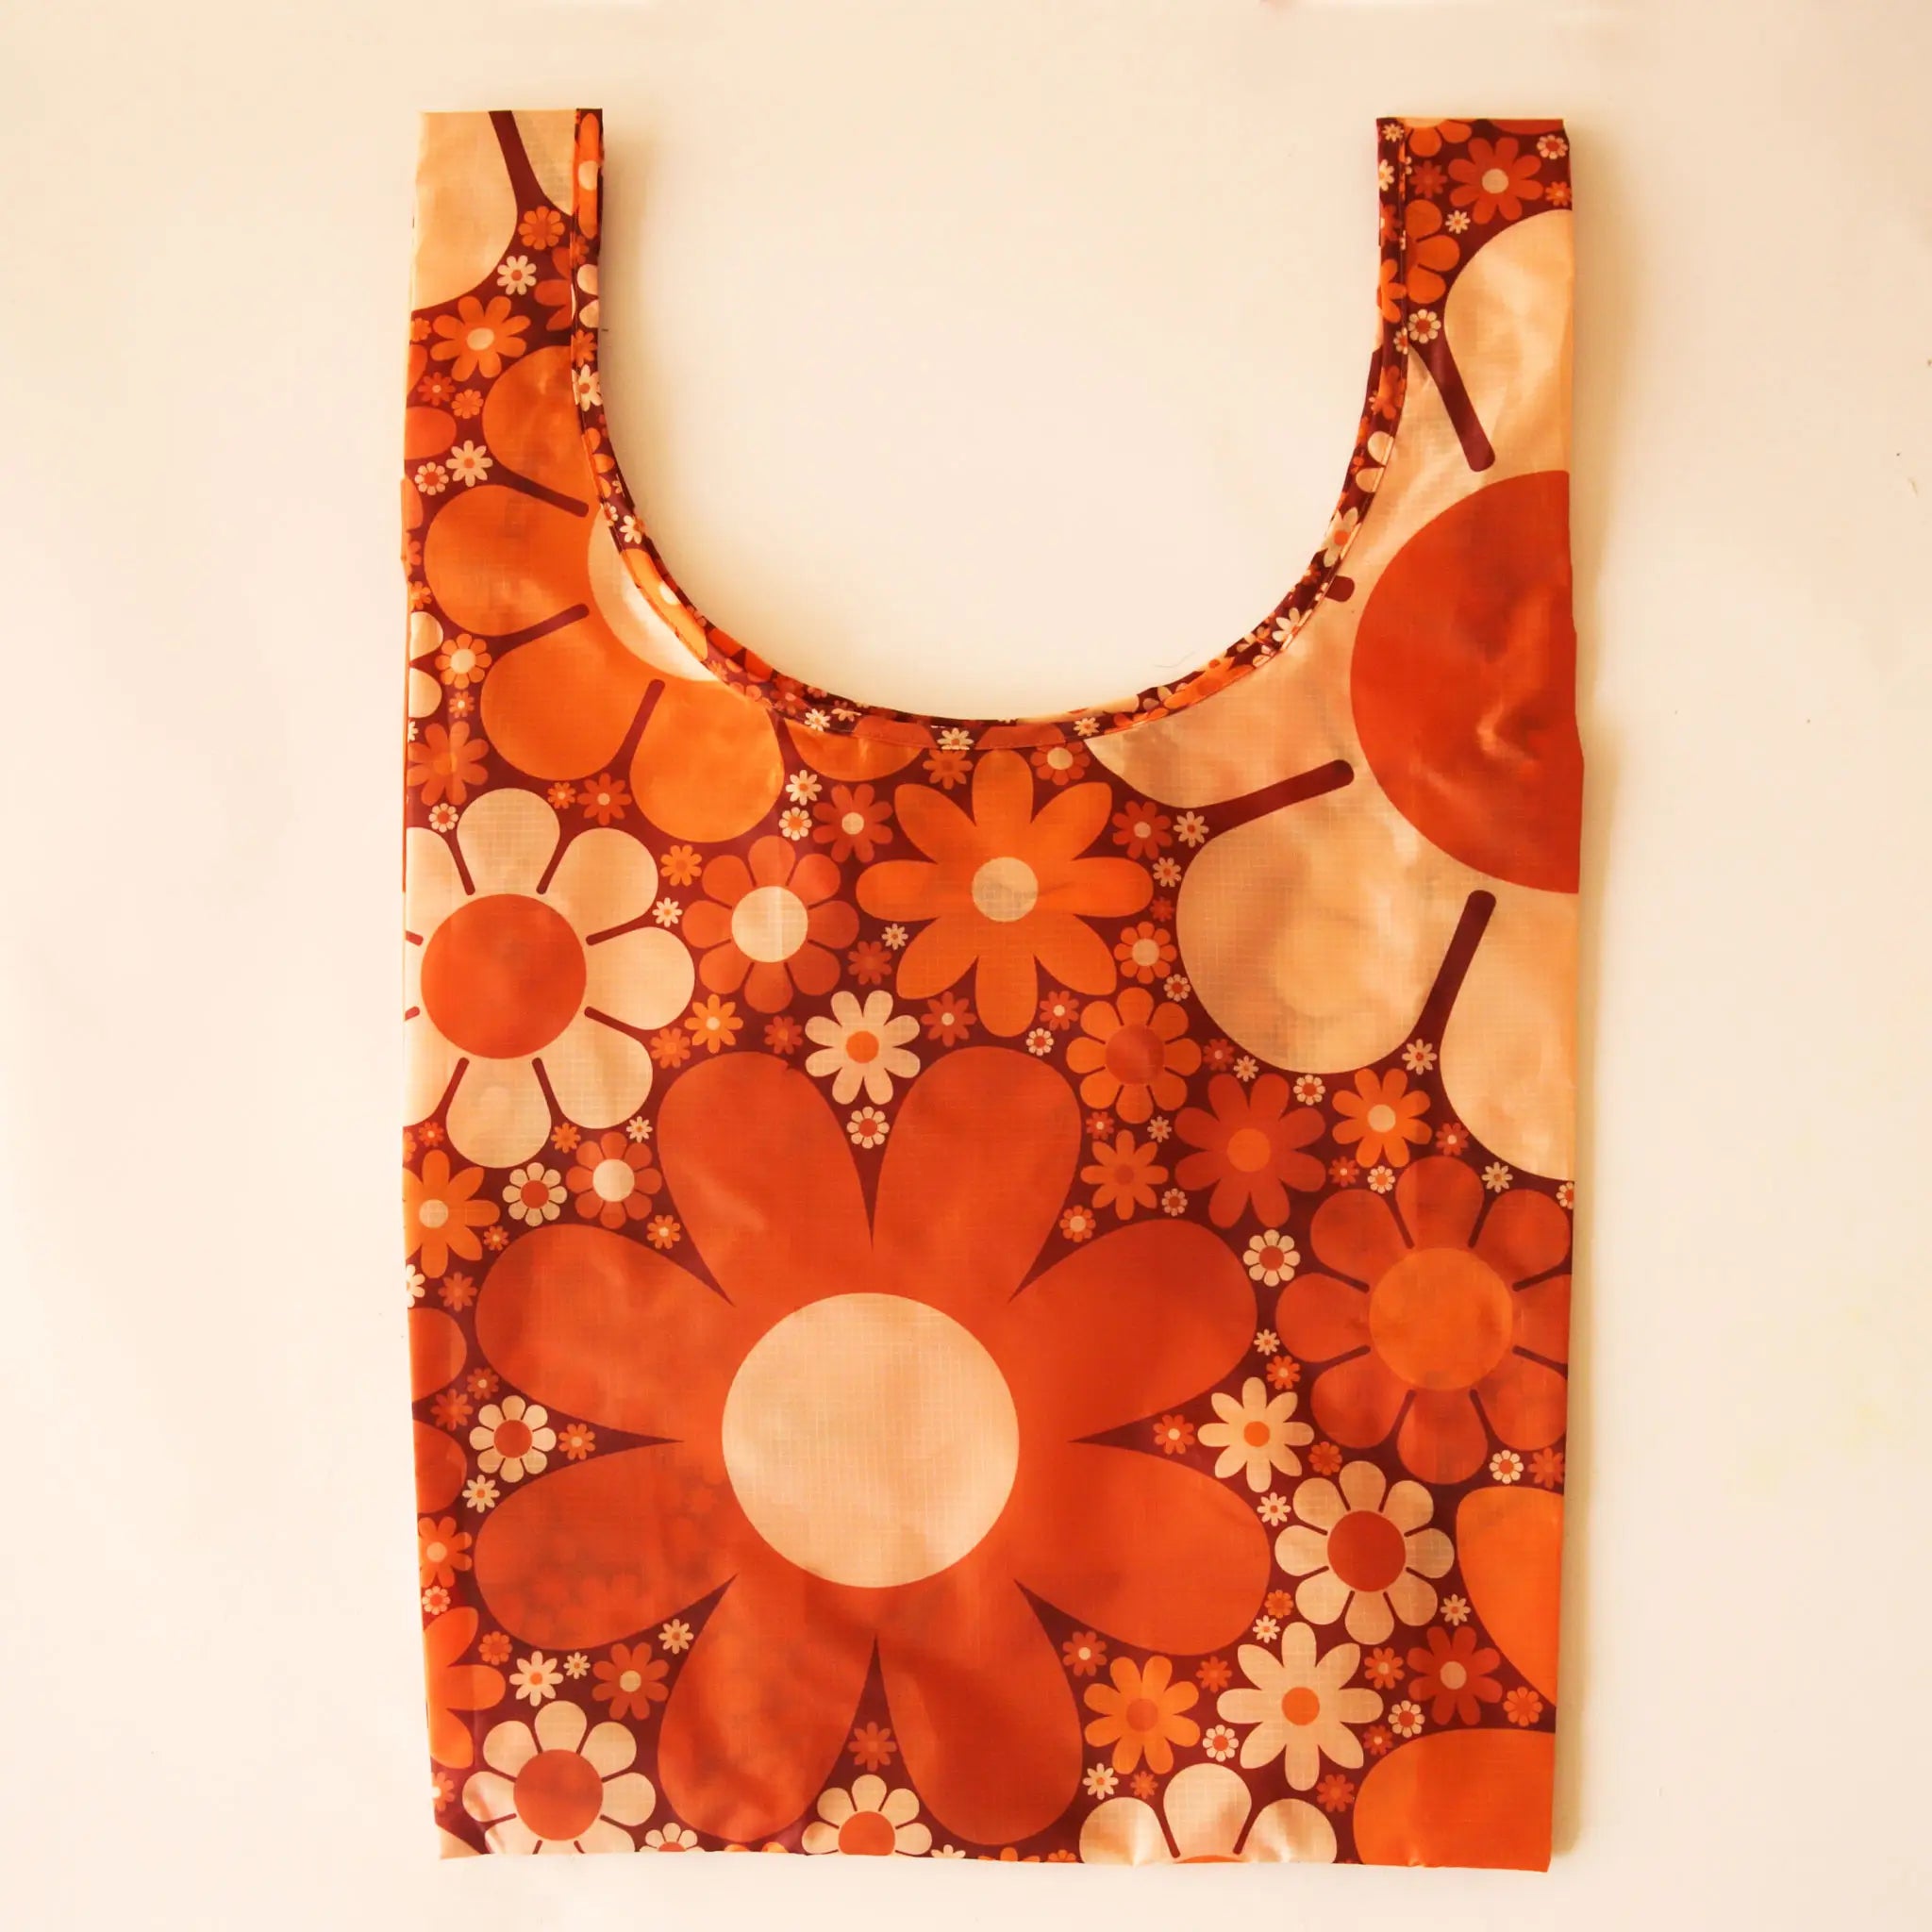 70s floral bag by Sunshine Studios